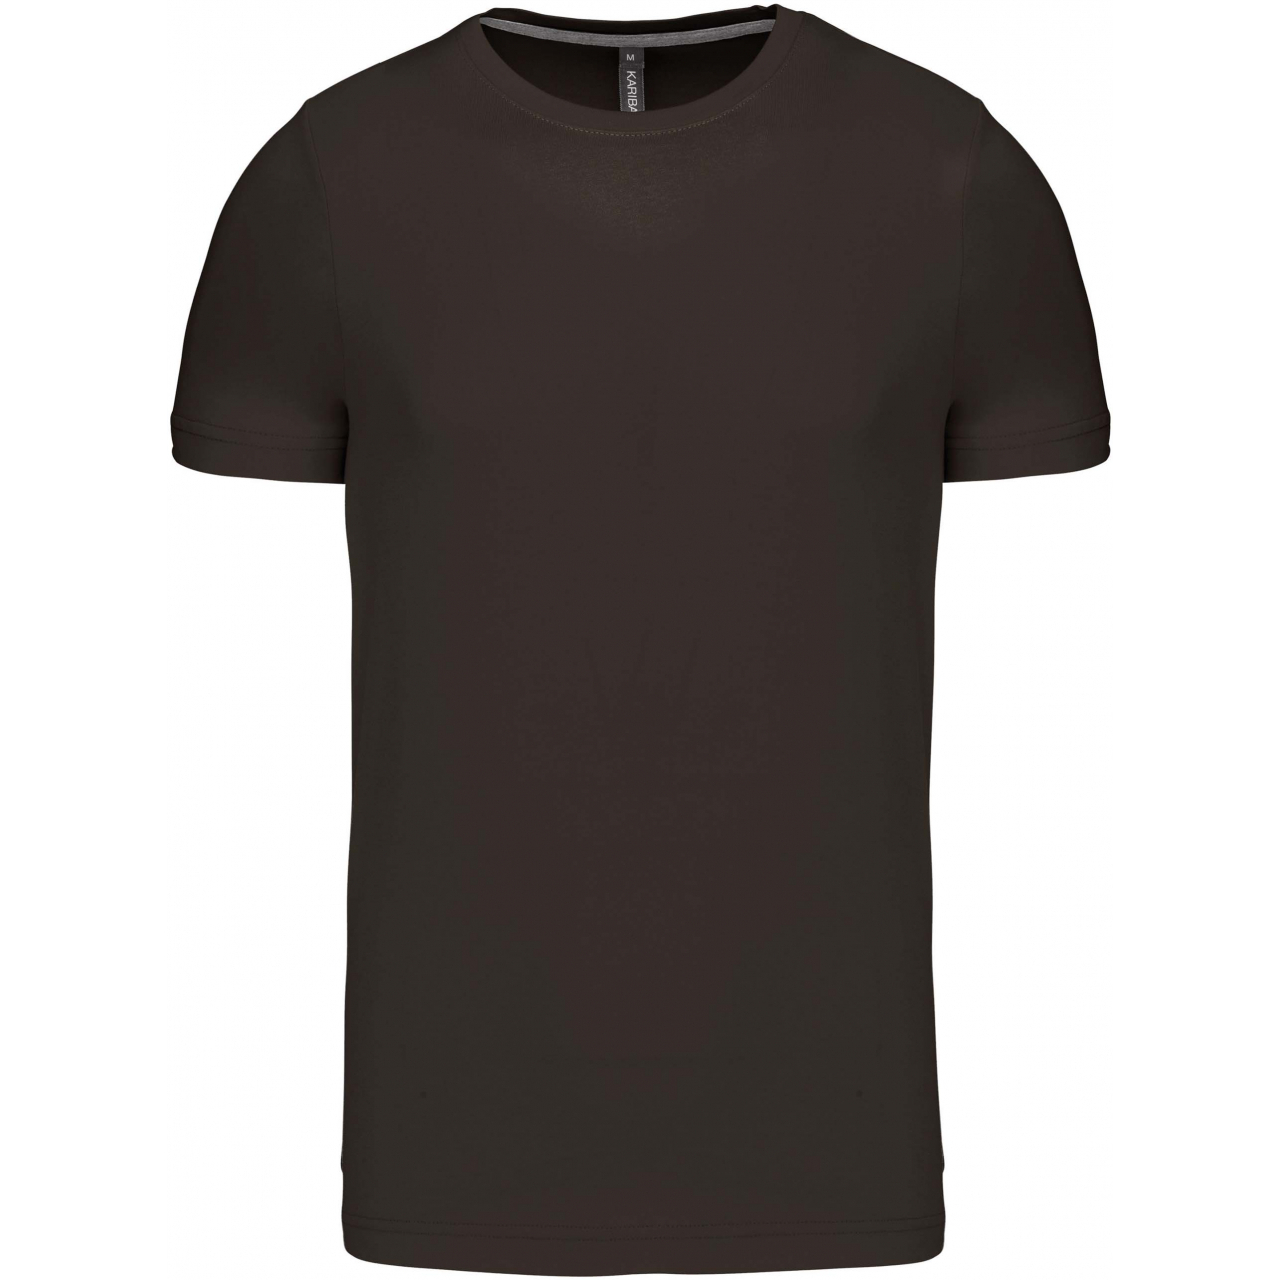 Pánské tričko Kariban krátký rukáv - tmavé khaki, M